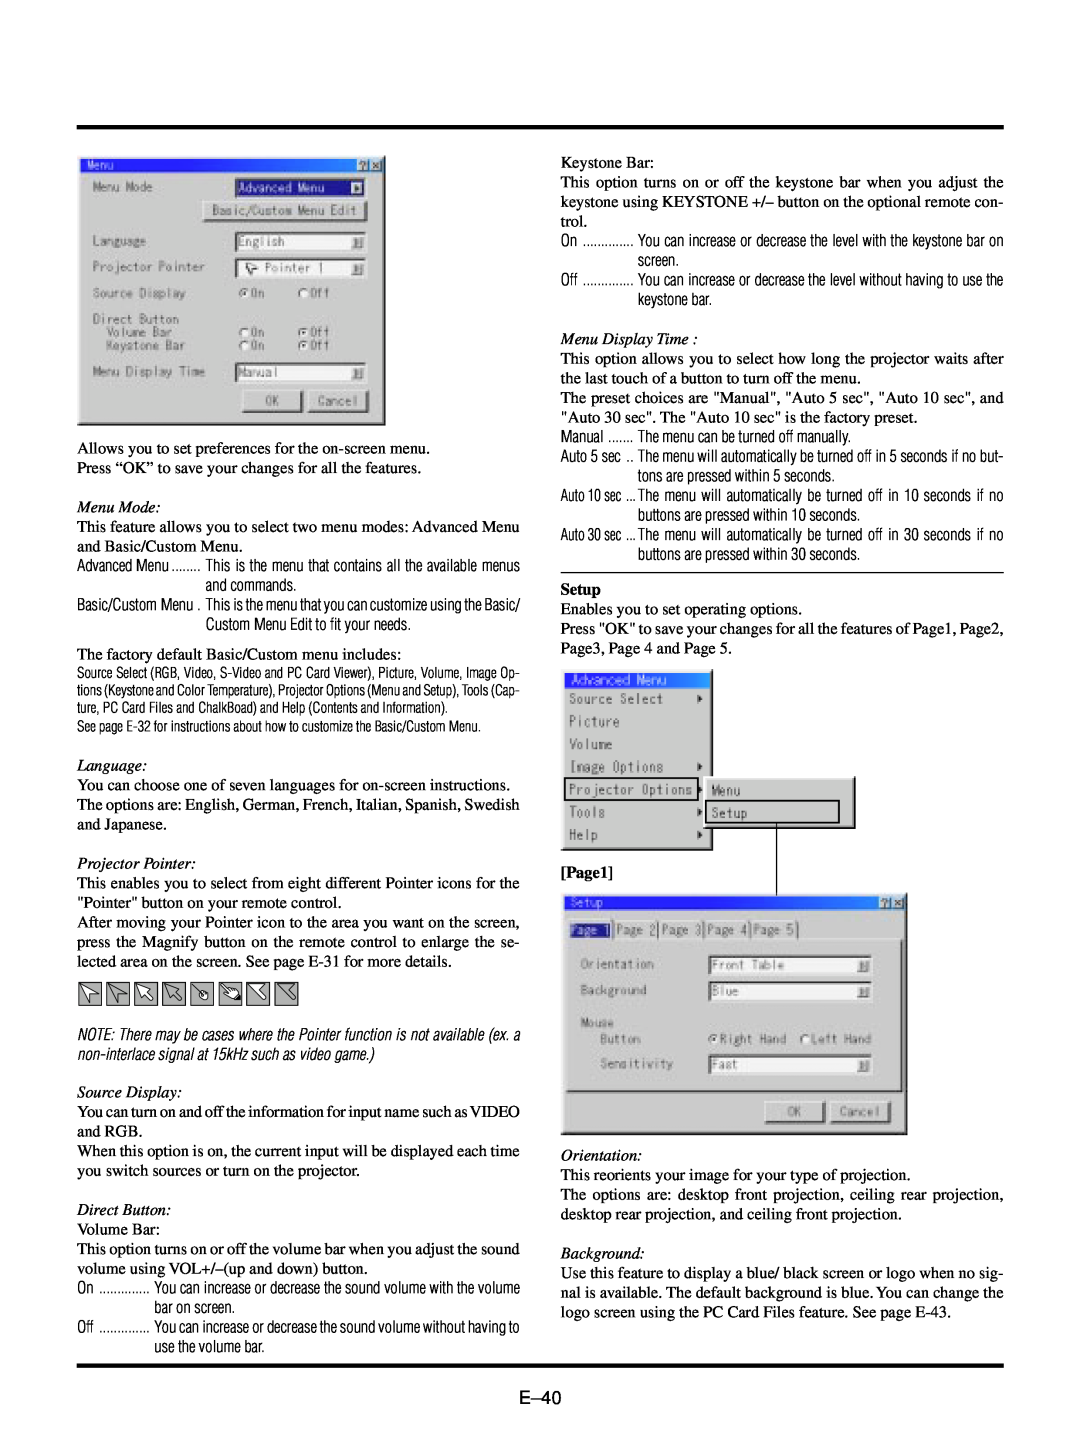 NEC LT150/LT85 user manual E–40, Setup, Page1 